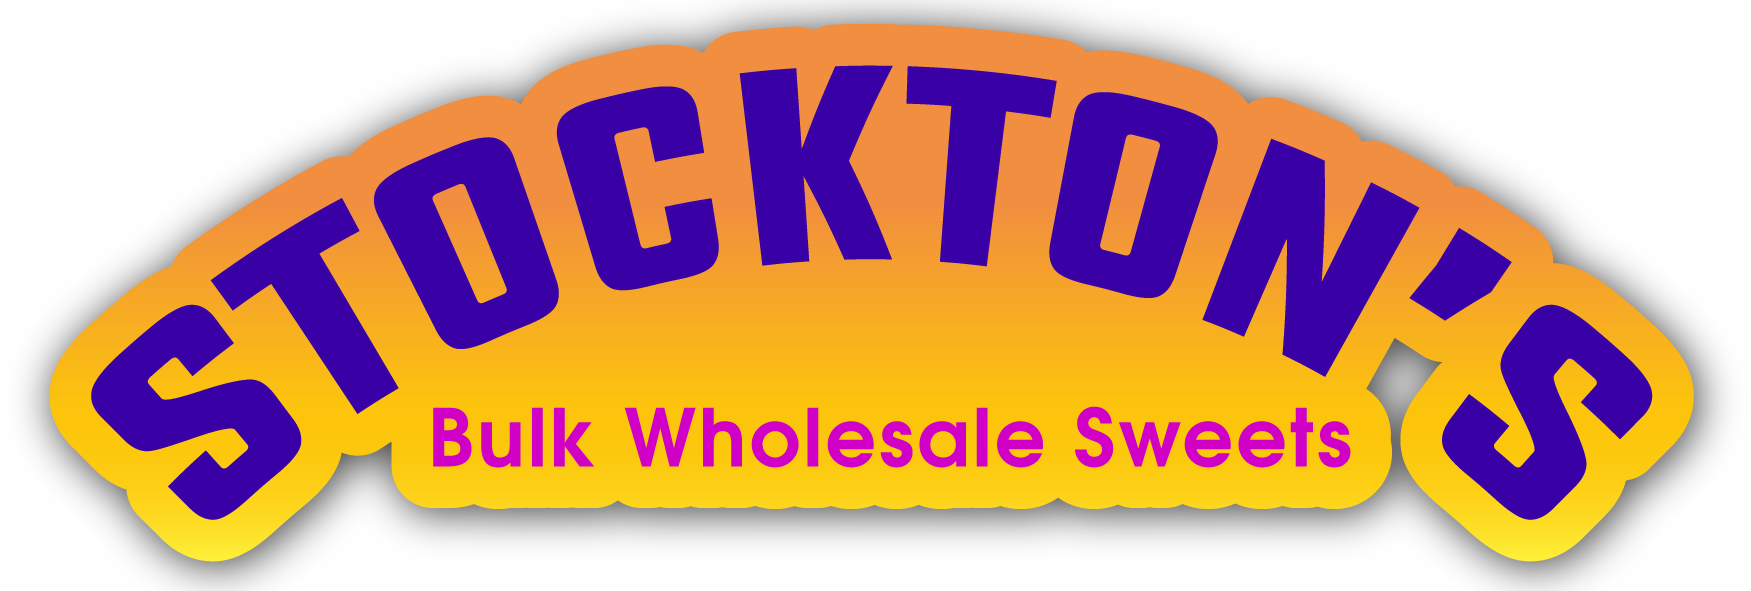 Stockton's Wholesale Sweets